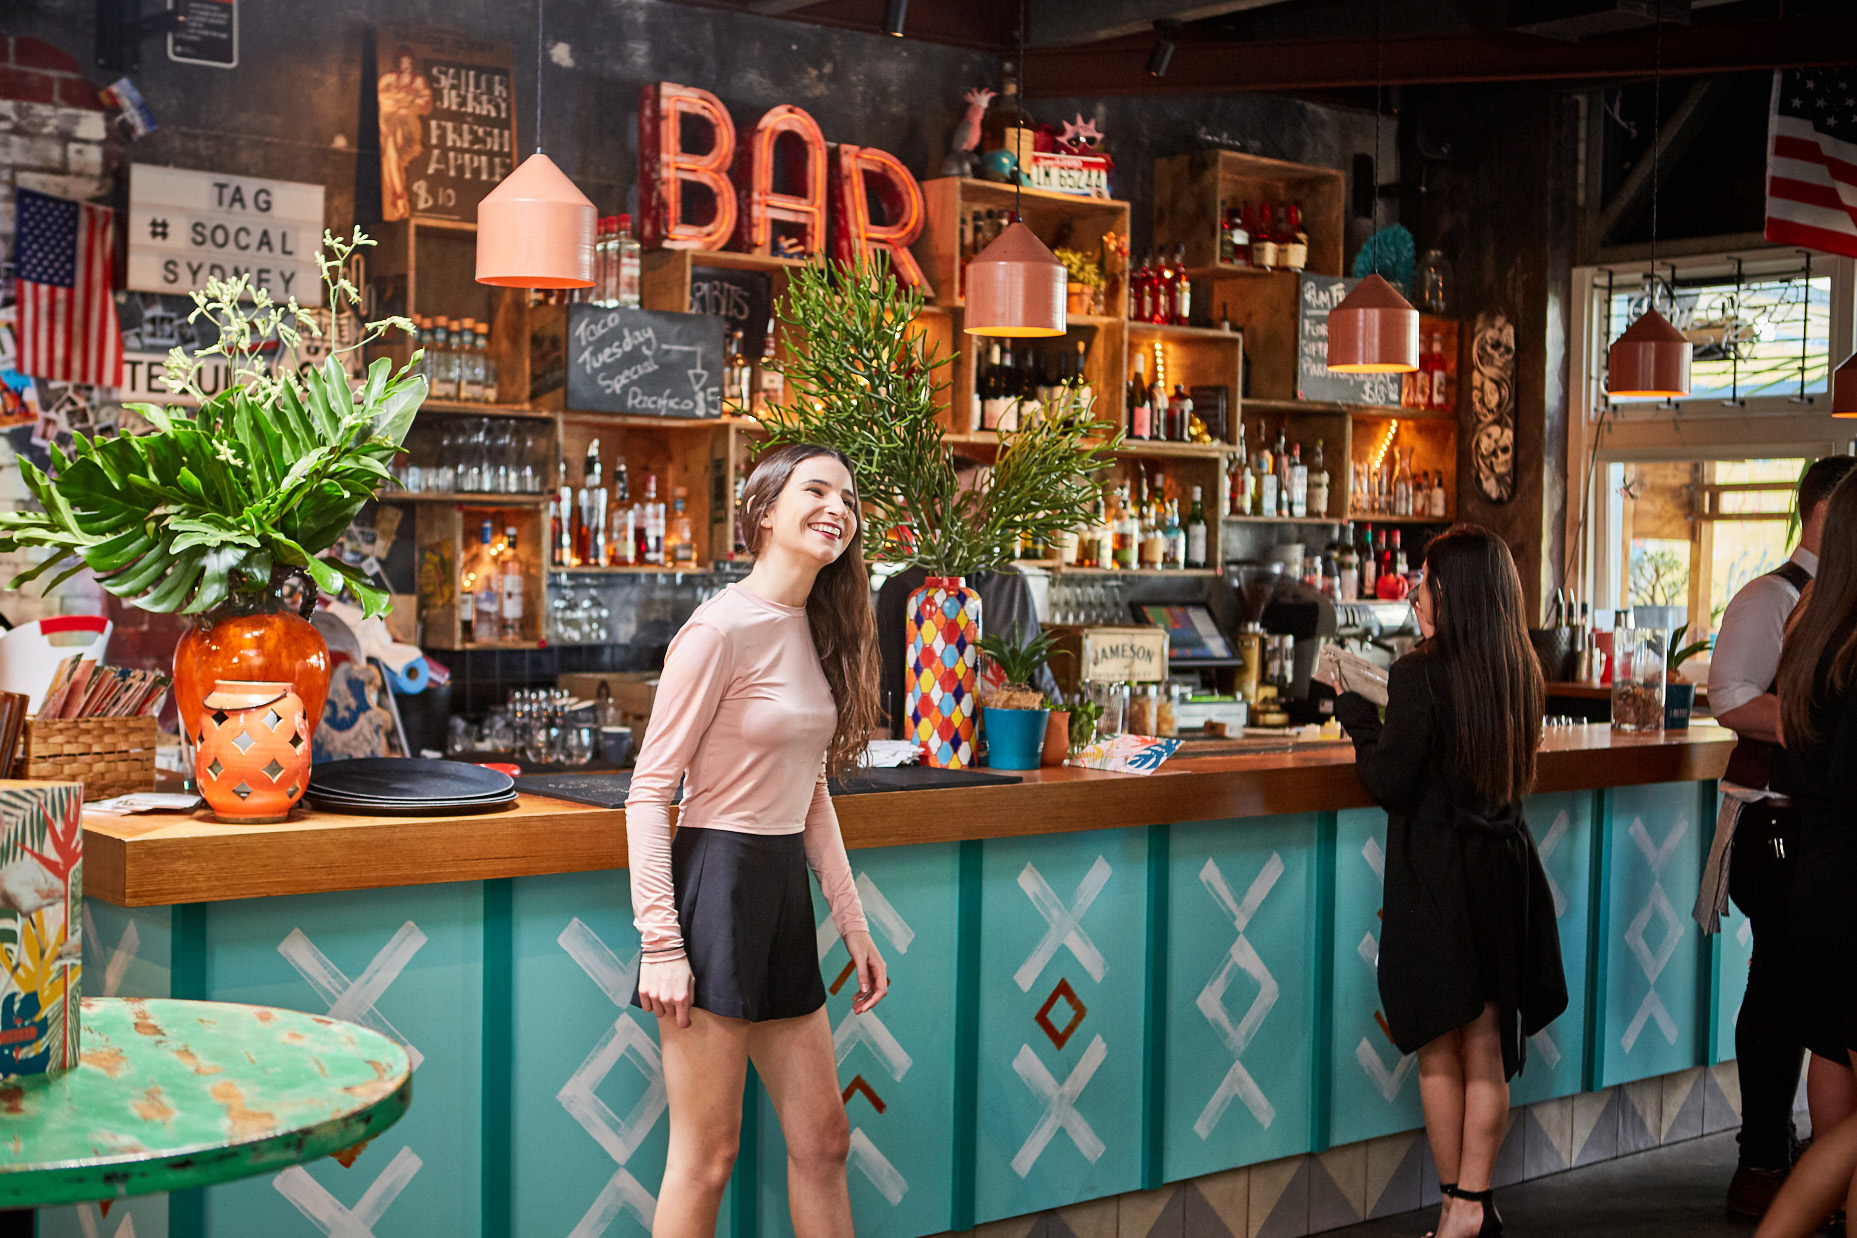 SoCal Sydney Bar